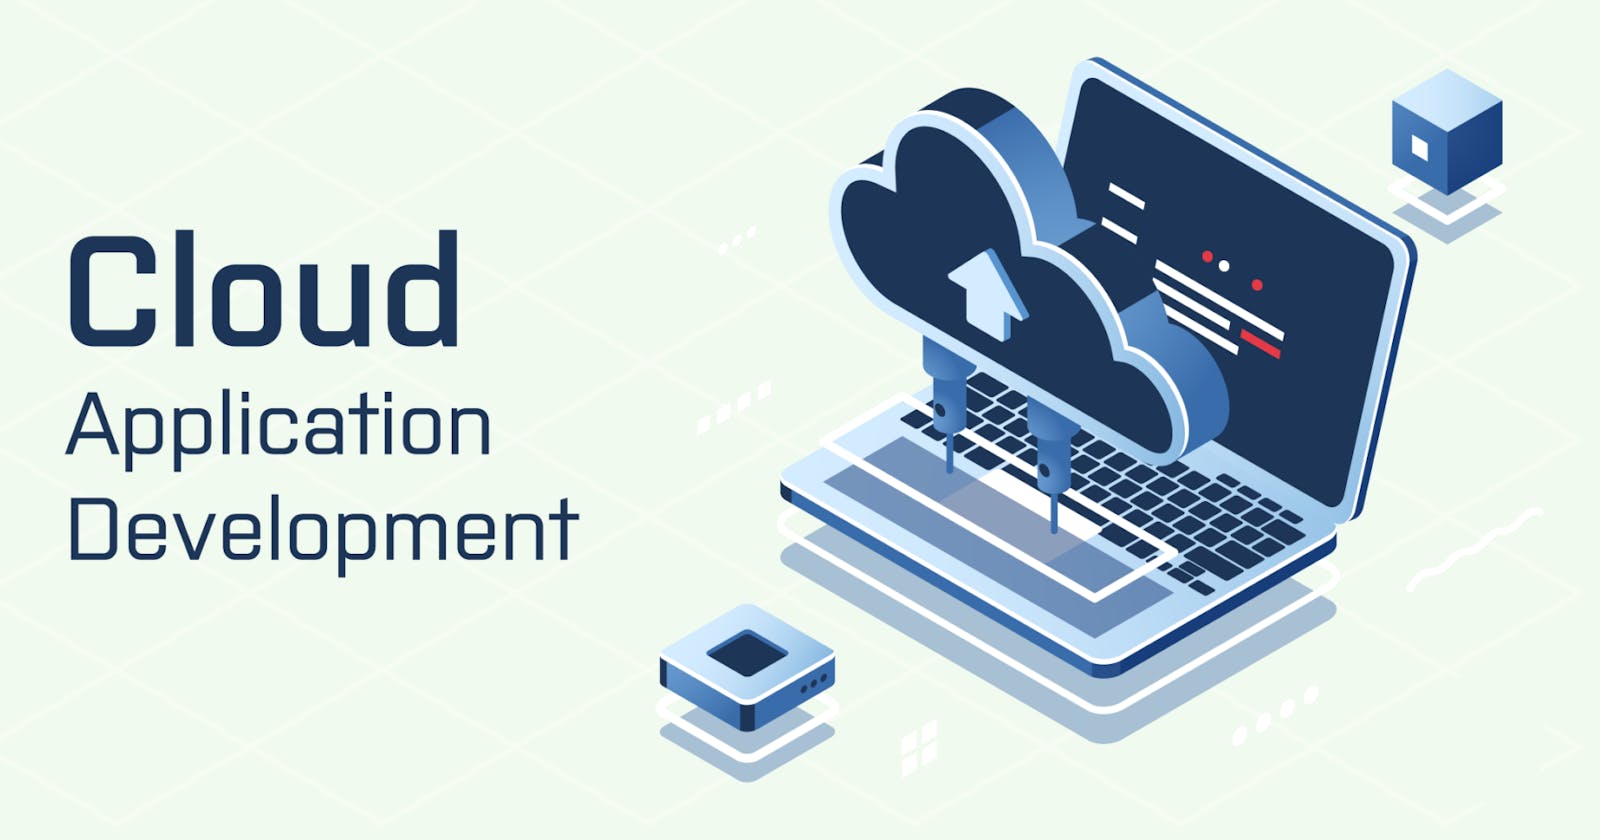 Cloud Application Development: Trends and Technologies